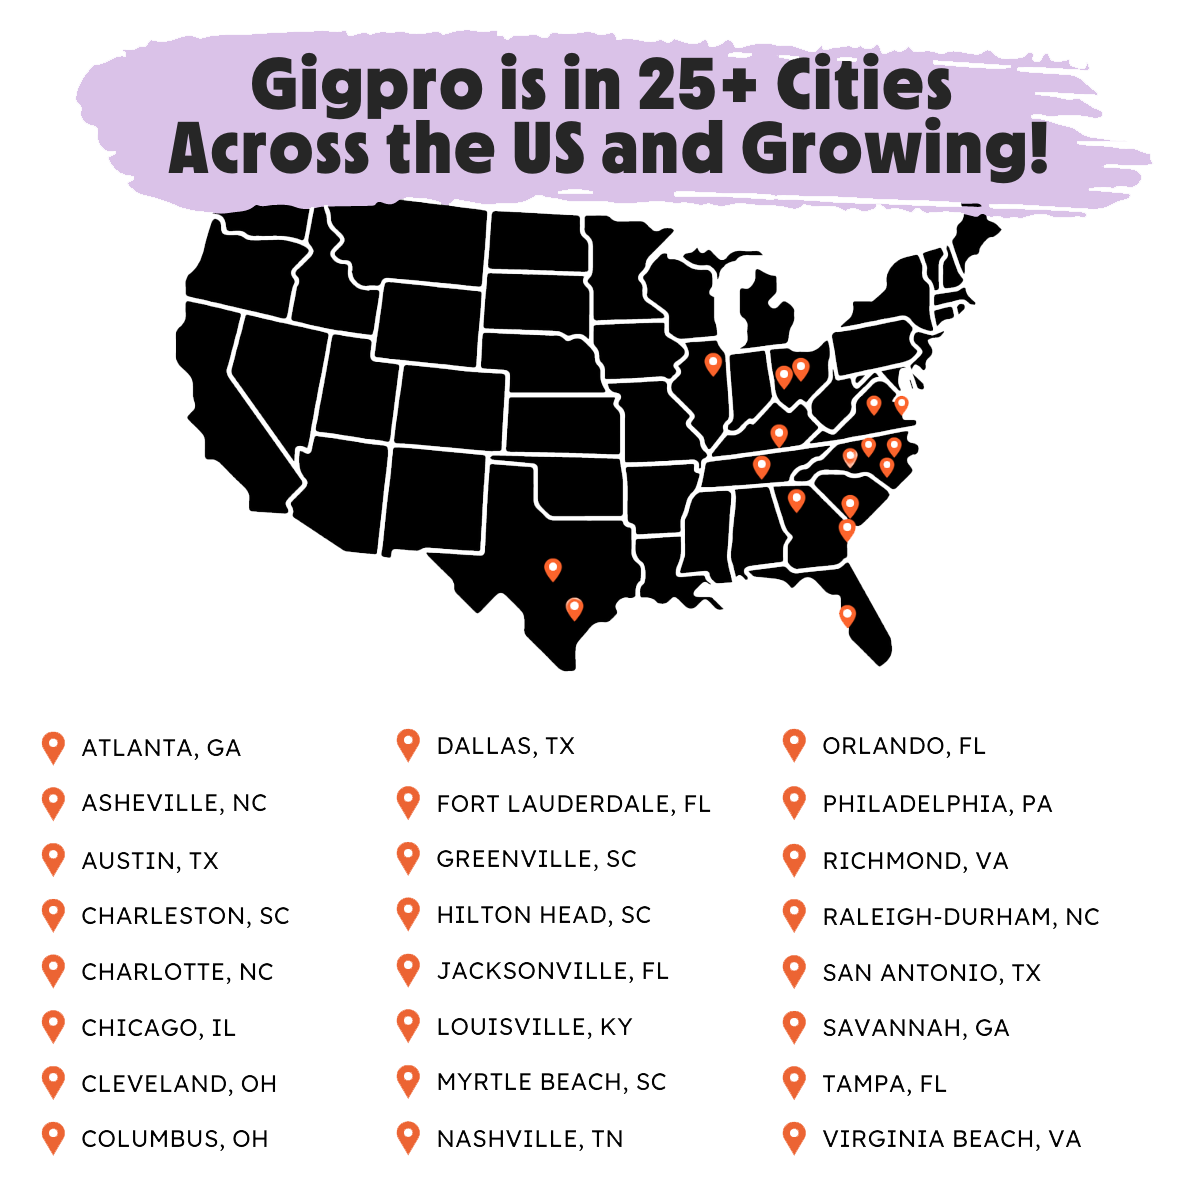 Gigpro Locations